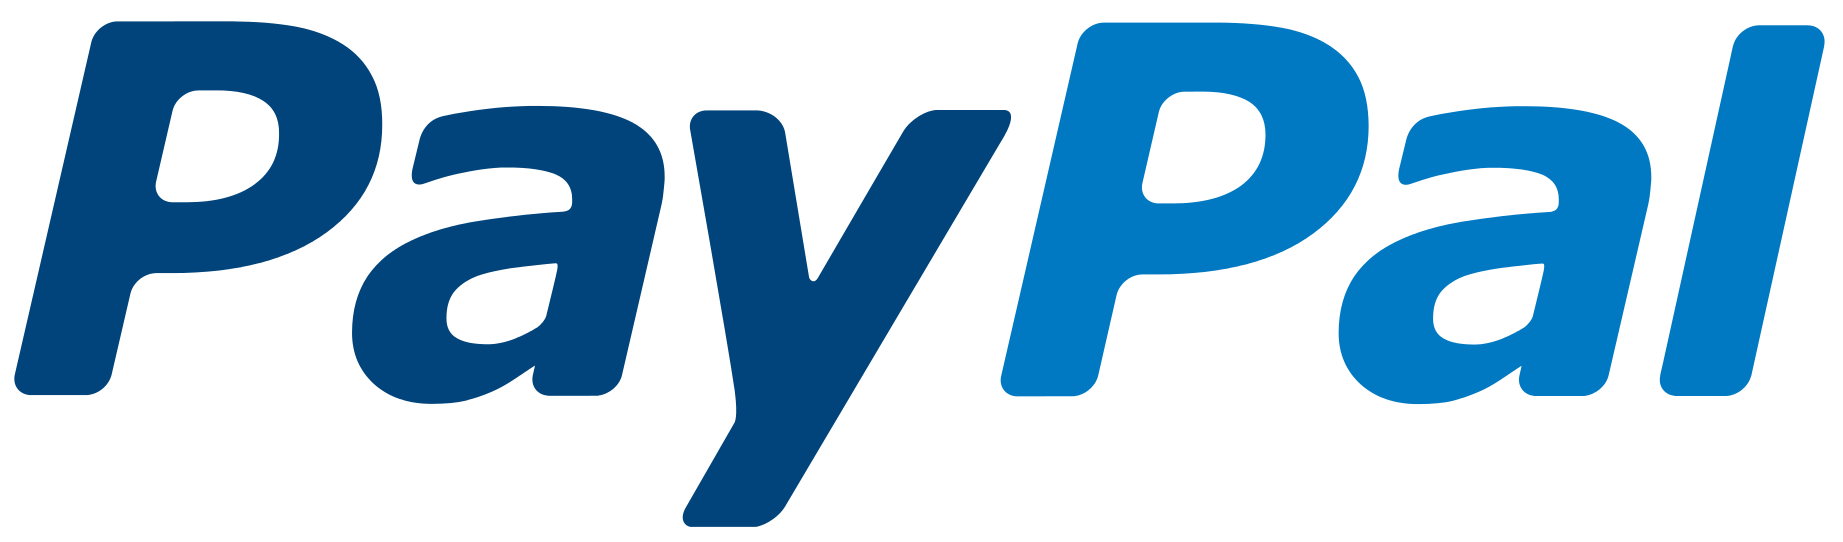 Paypal Credit Card Logos Png